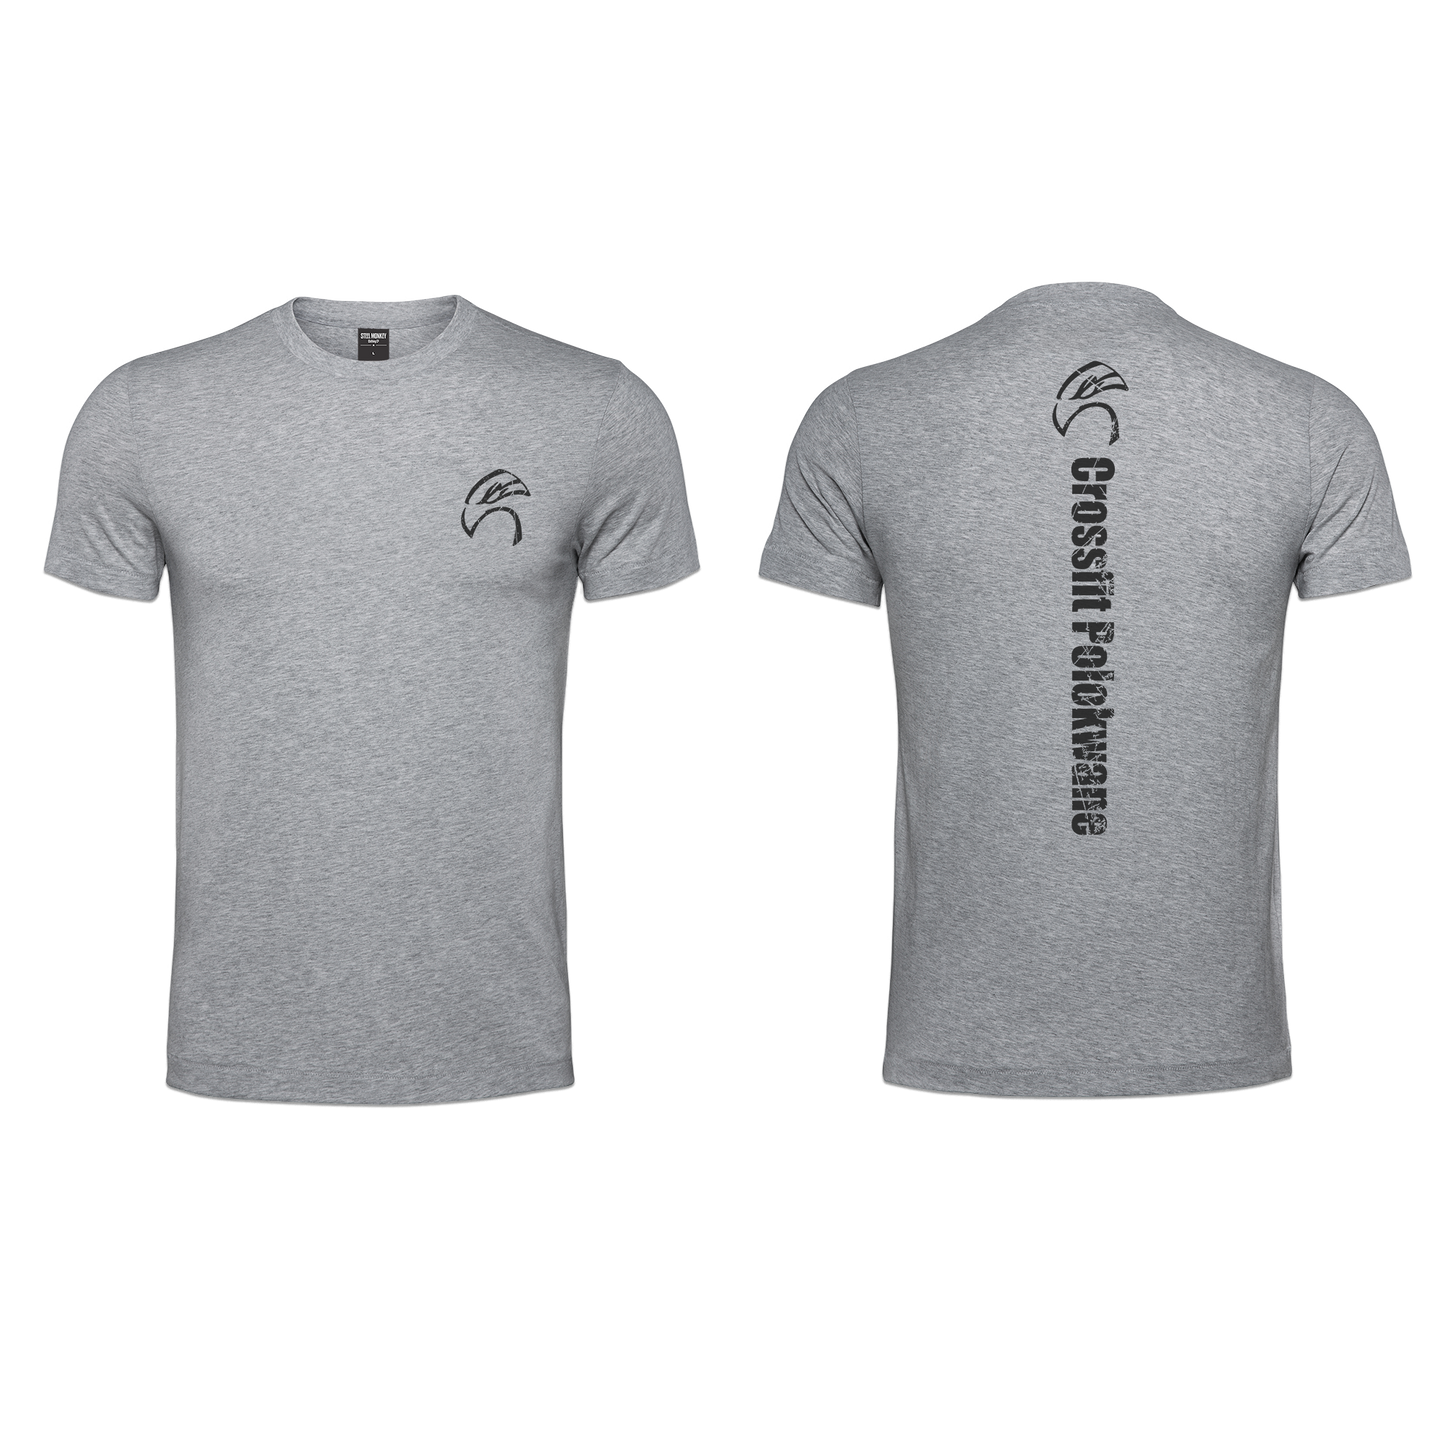 CrossFit Polokwane Men's T-Shirt - Grey Melange